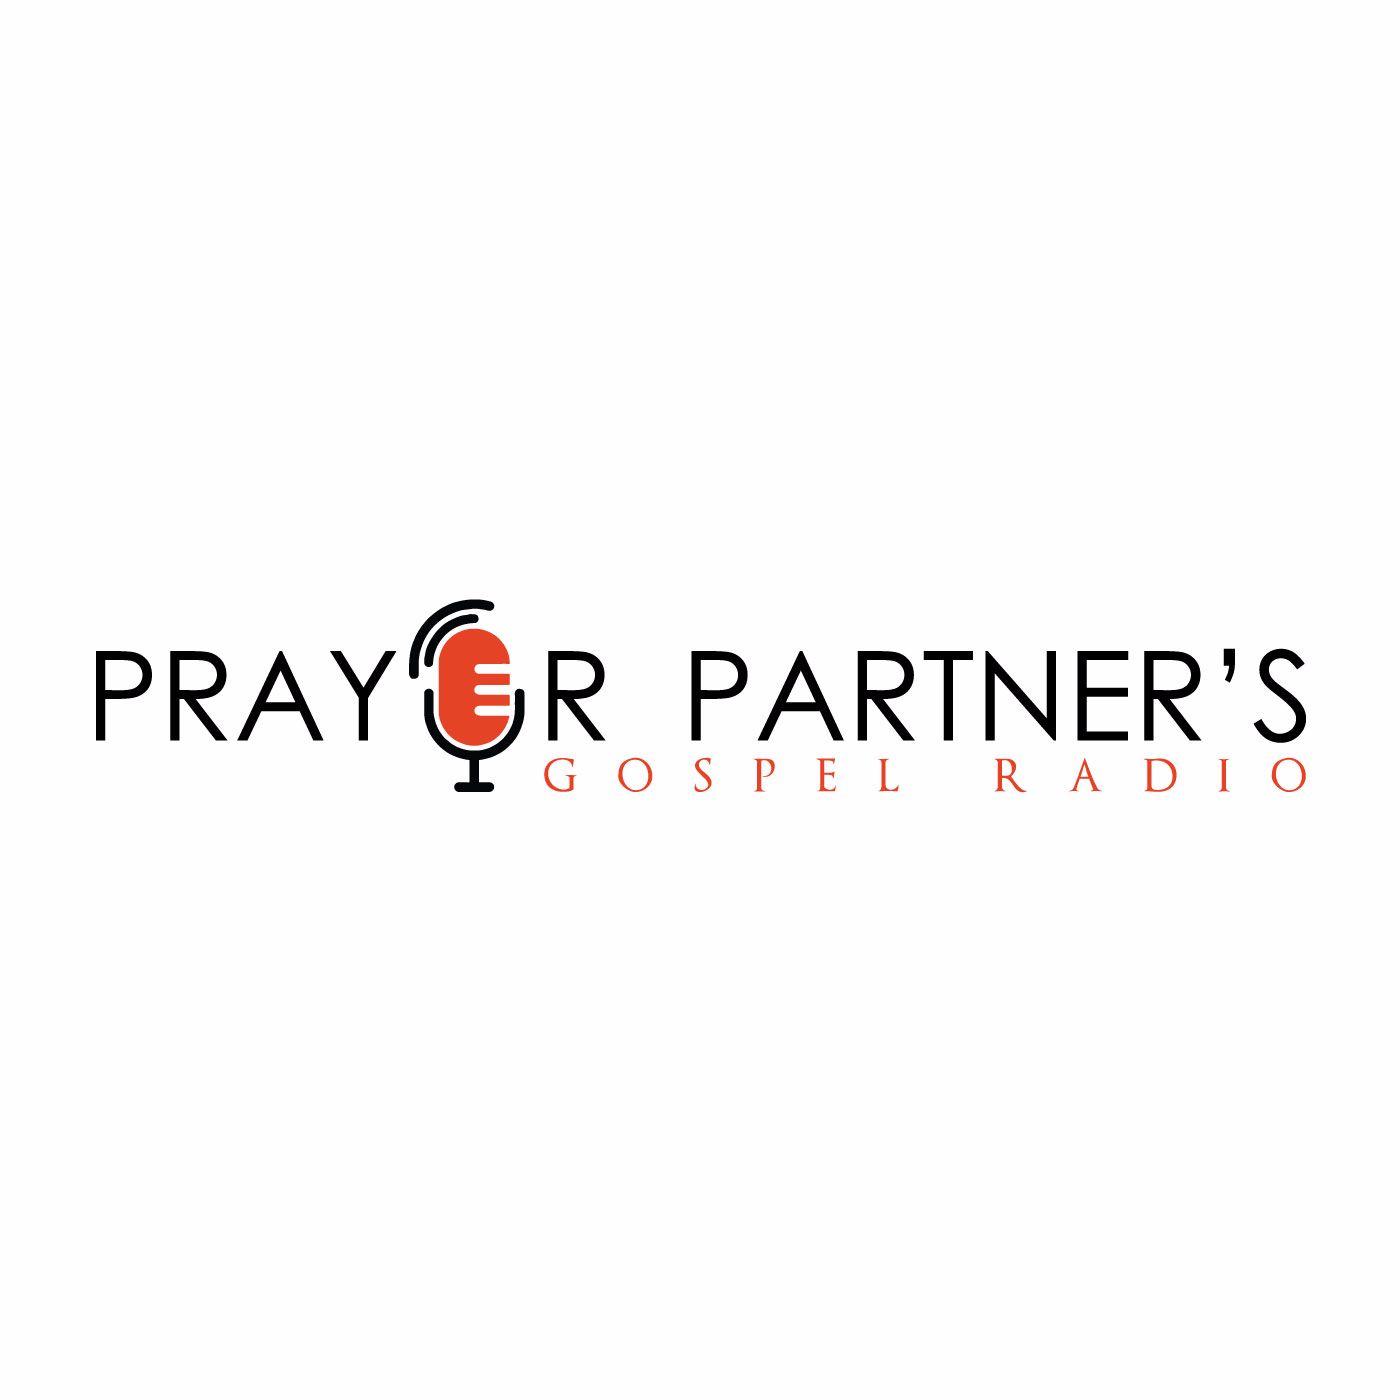 Prayer Partner's Gospel Radio